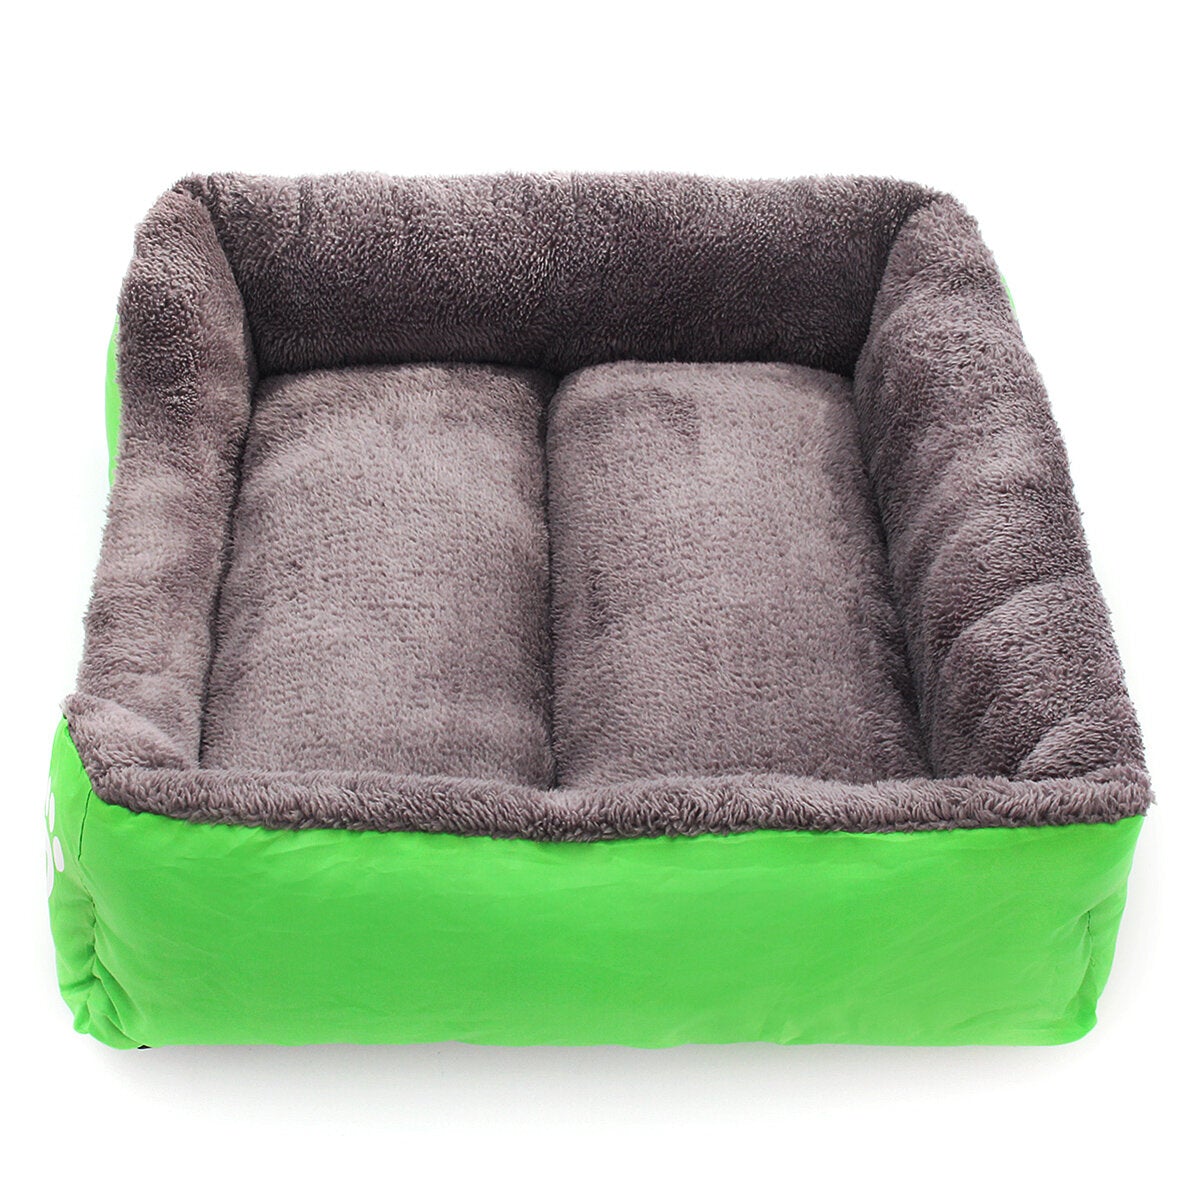 110*85*19cm Soft Dog Cat Bed Puppy Cushion House Pet Warm Kennel Mat Blanket